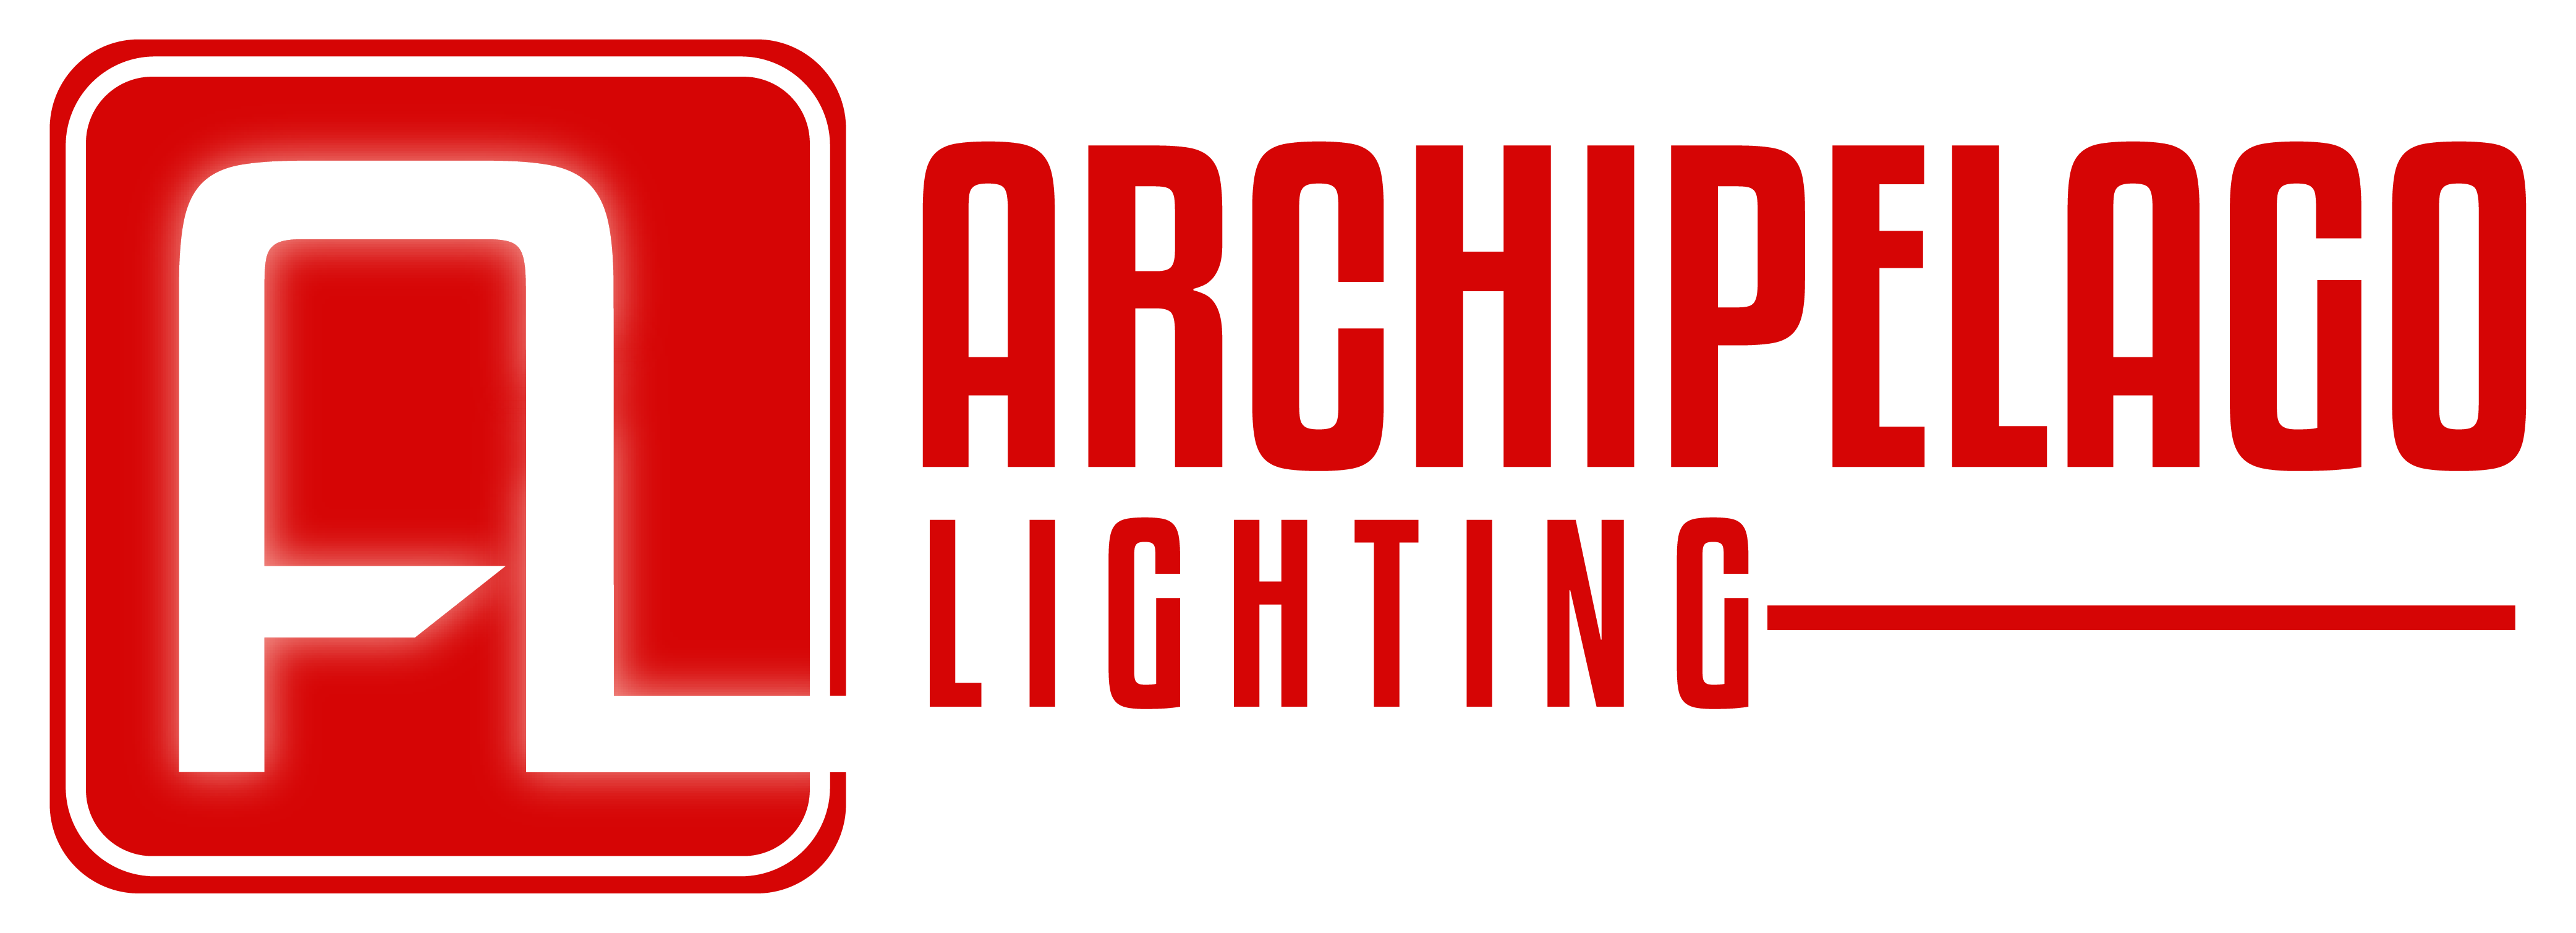 Archipelago Lighting